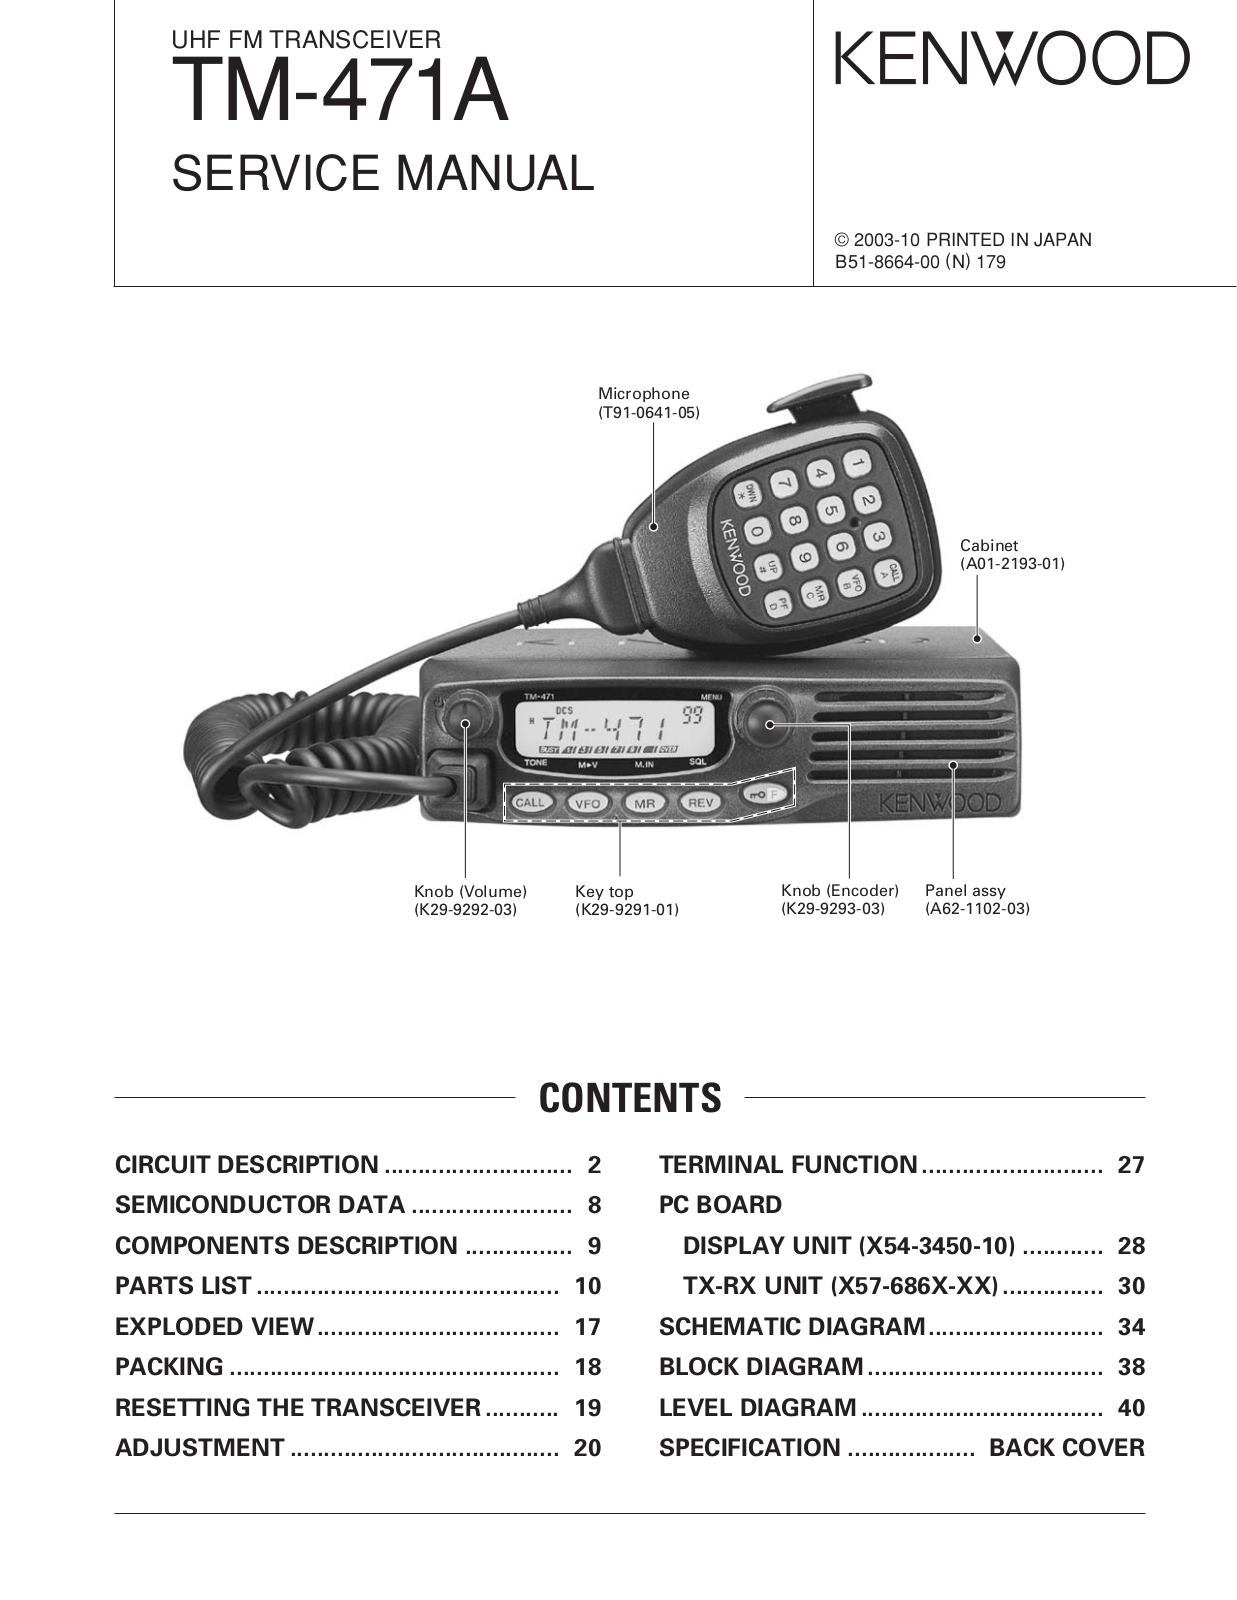 Kenwood TM-471A Service Manual